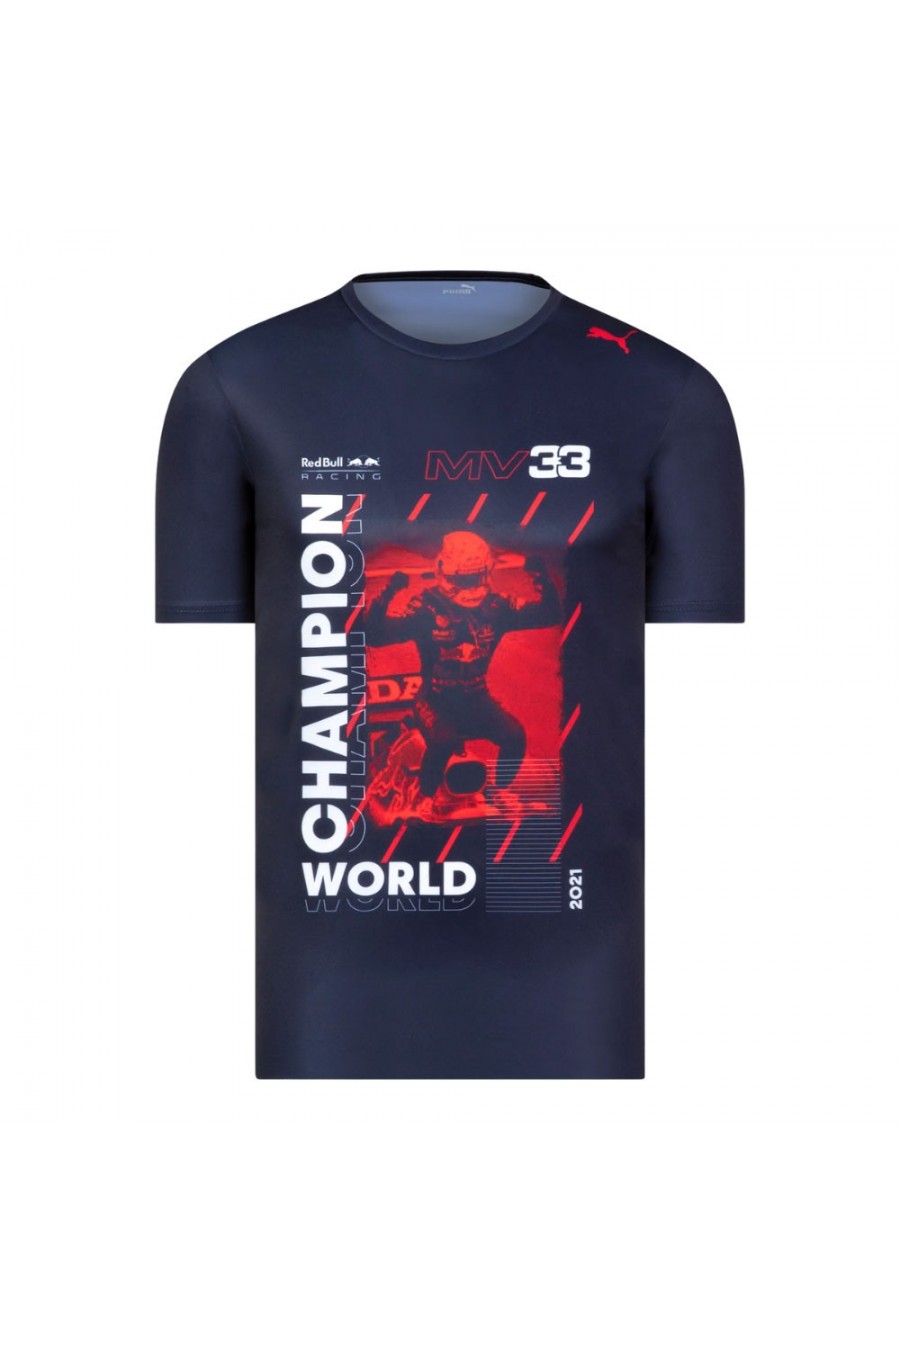 driehoek Uit tyfoon Max Verstappen 2021 F1 Championship T-shirt